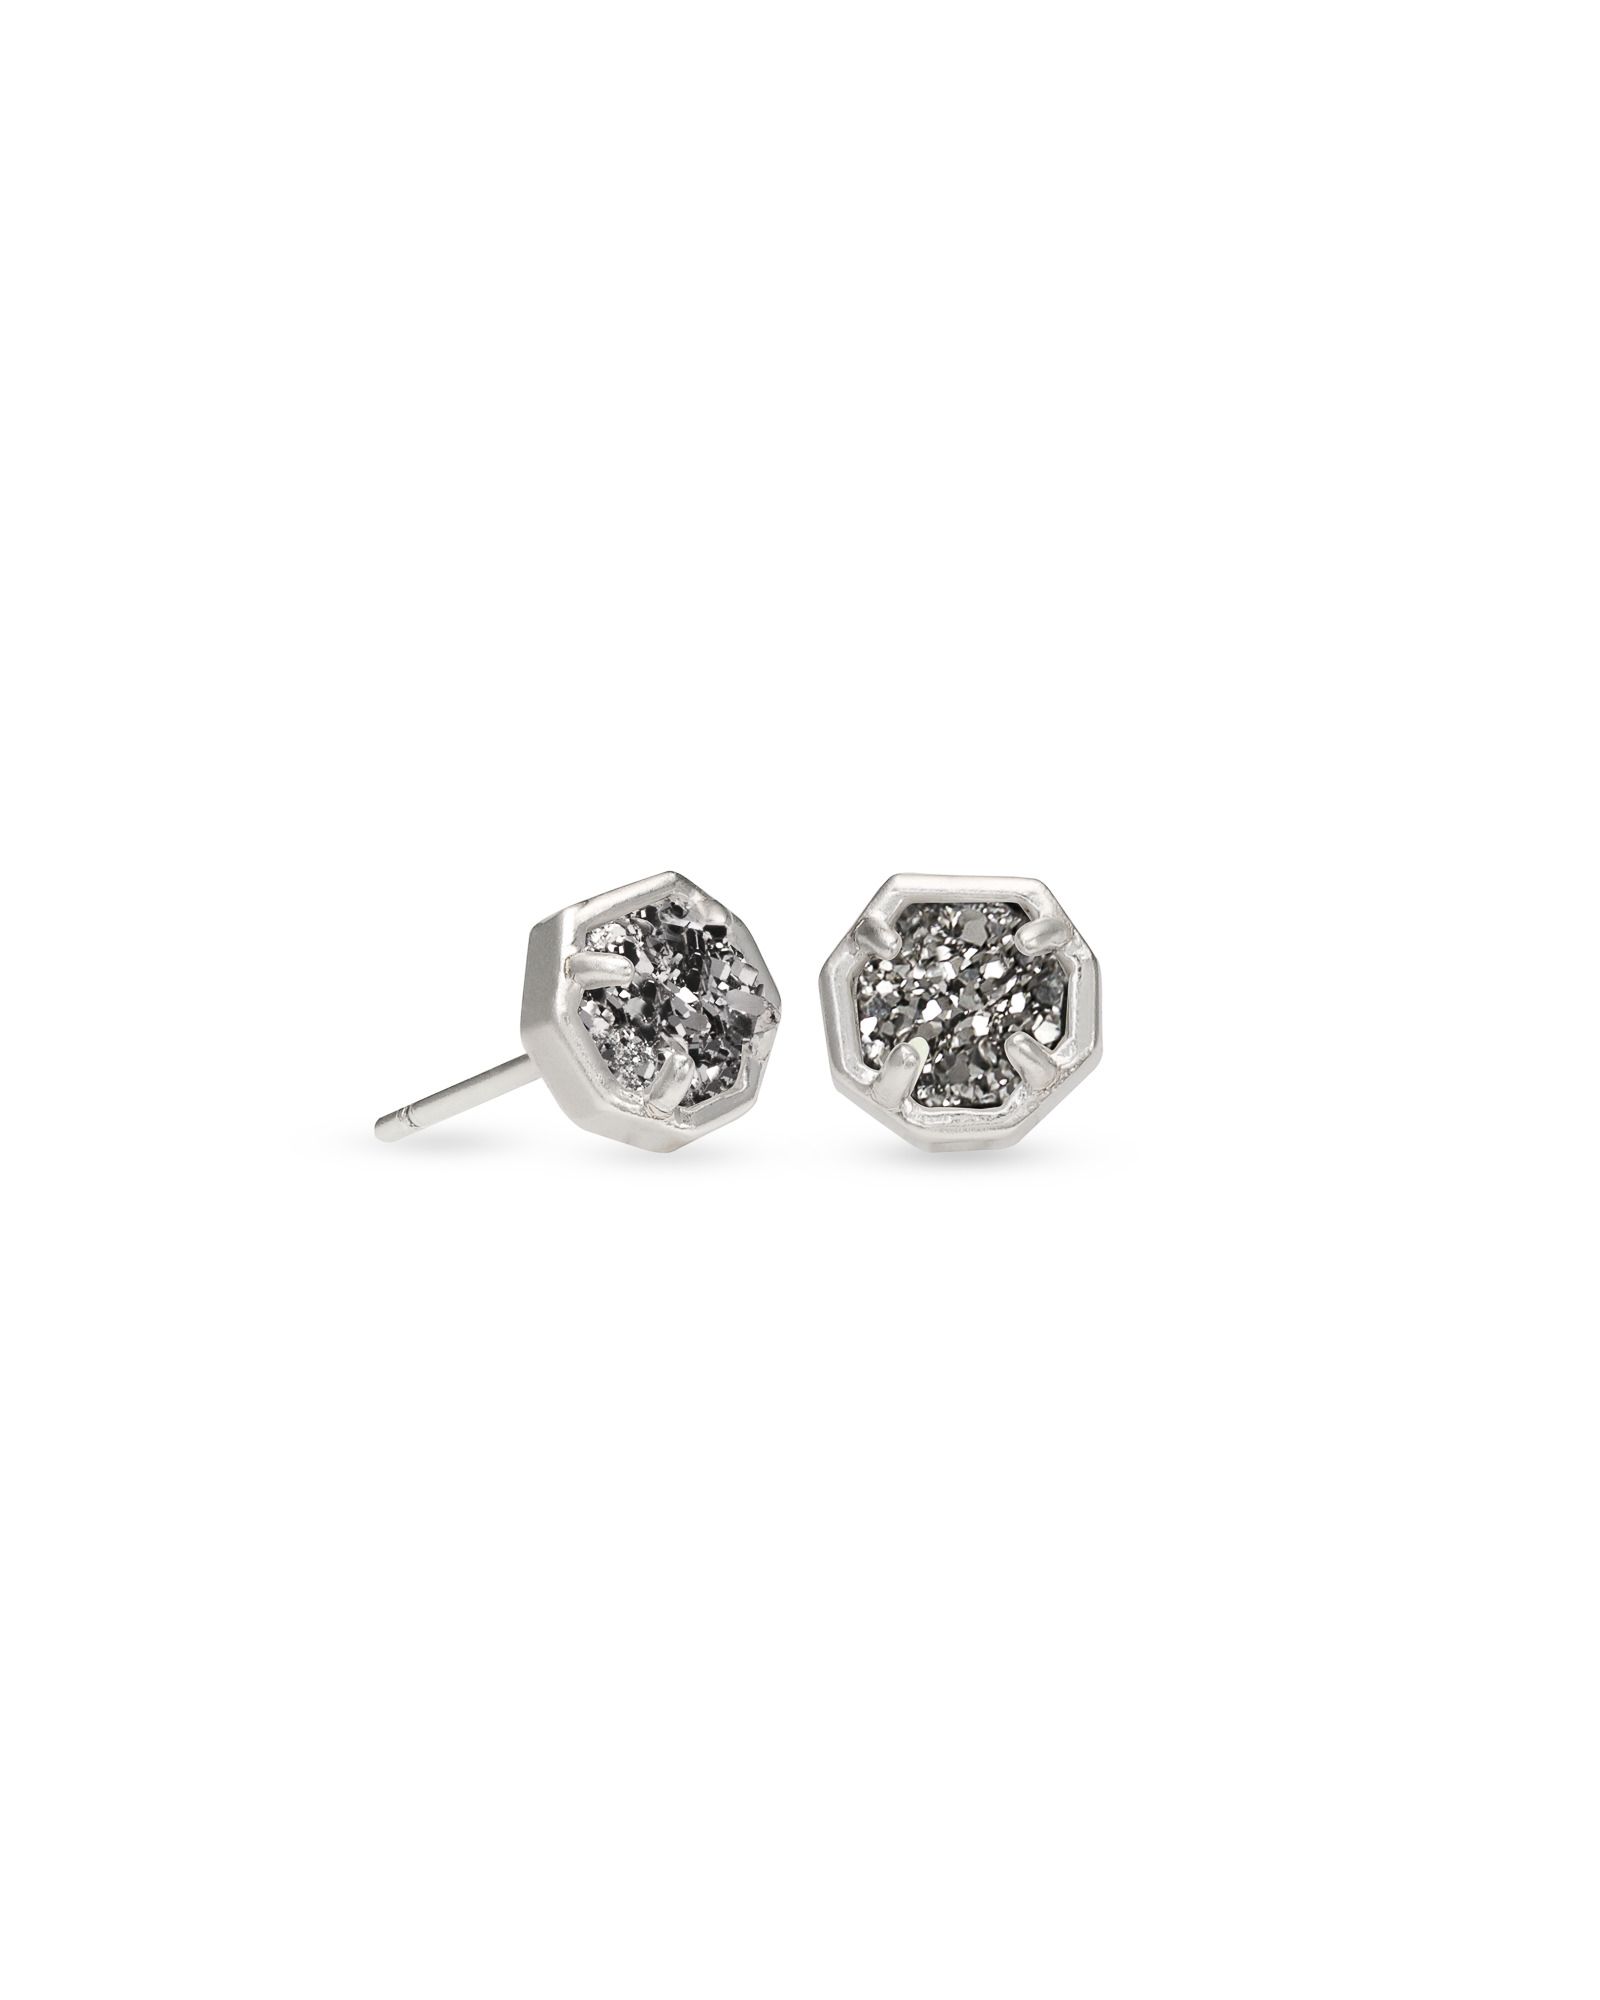 Nola Silver Stud Earrings in Platinum Drusy | Kendra Scott